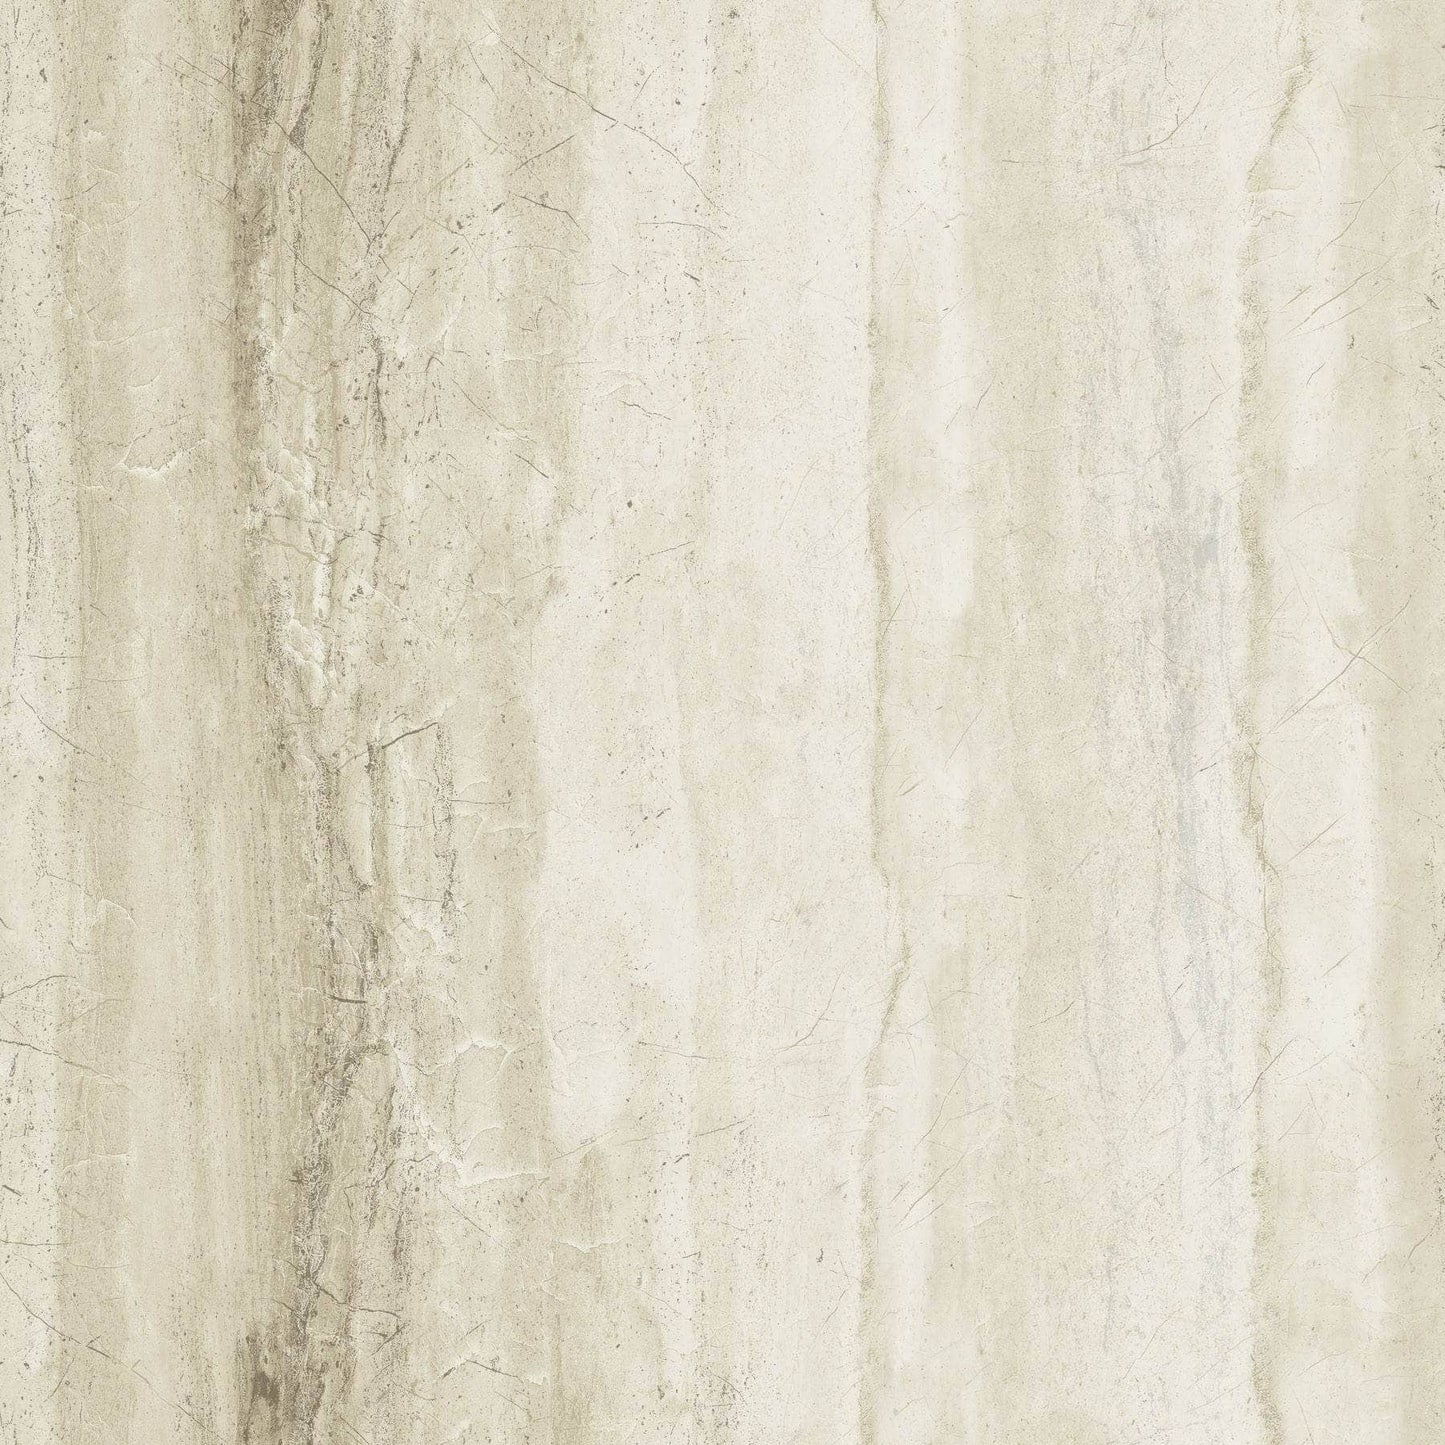 Wallpaper  -  Debona Vertical Marble Wallpaper - 5042  -  60009441